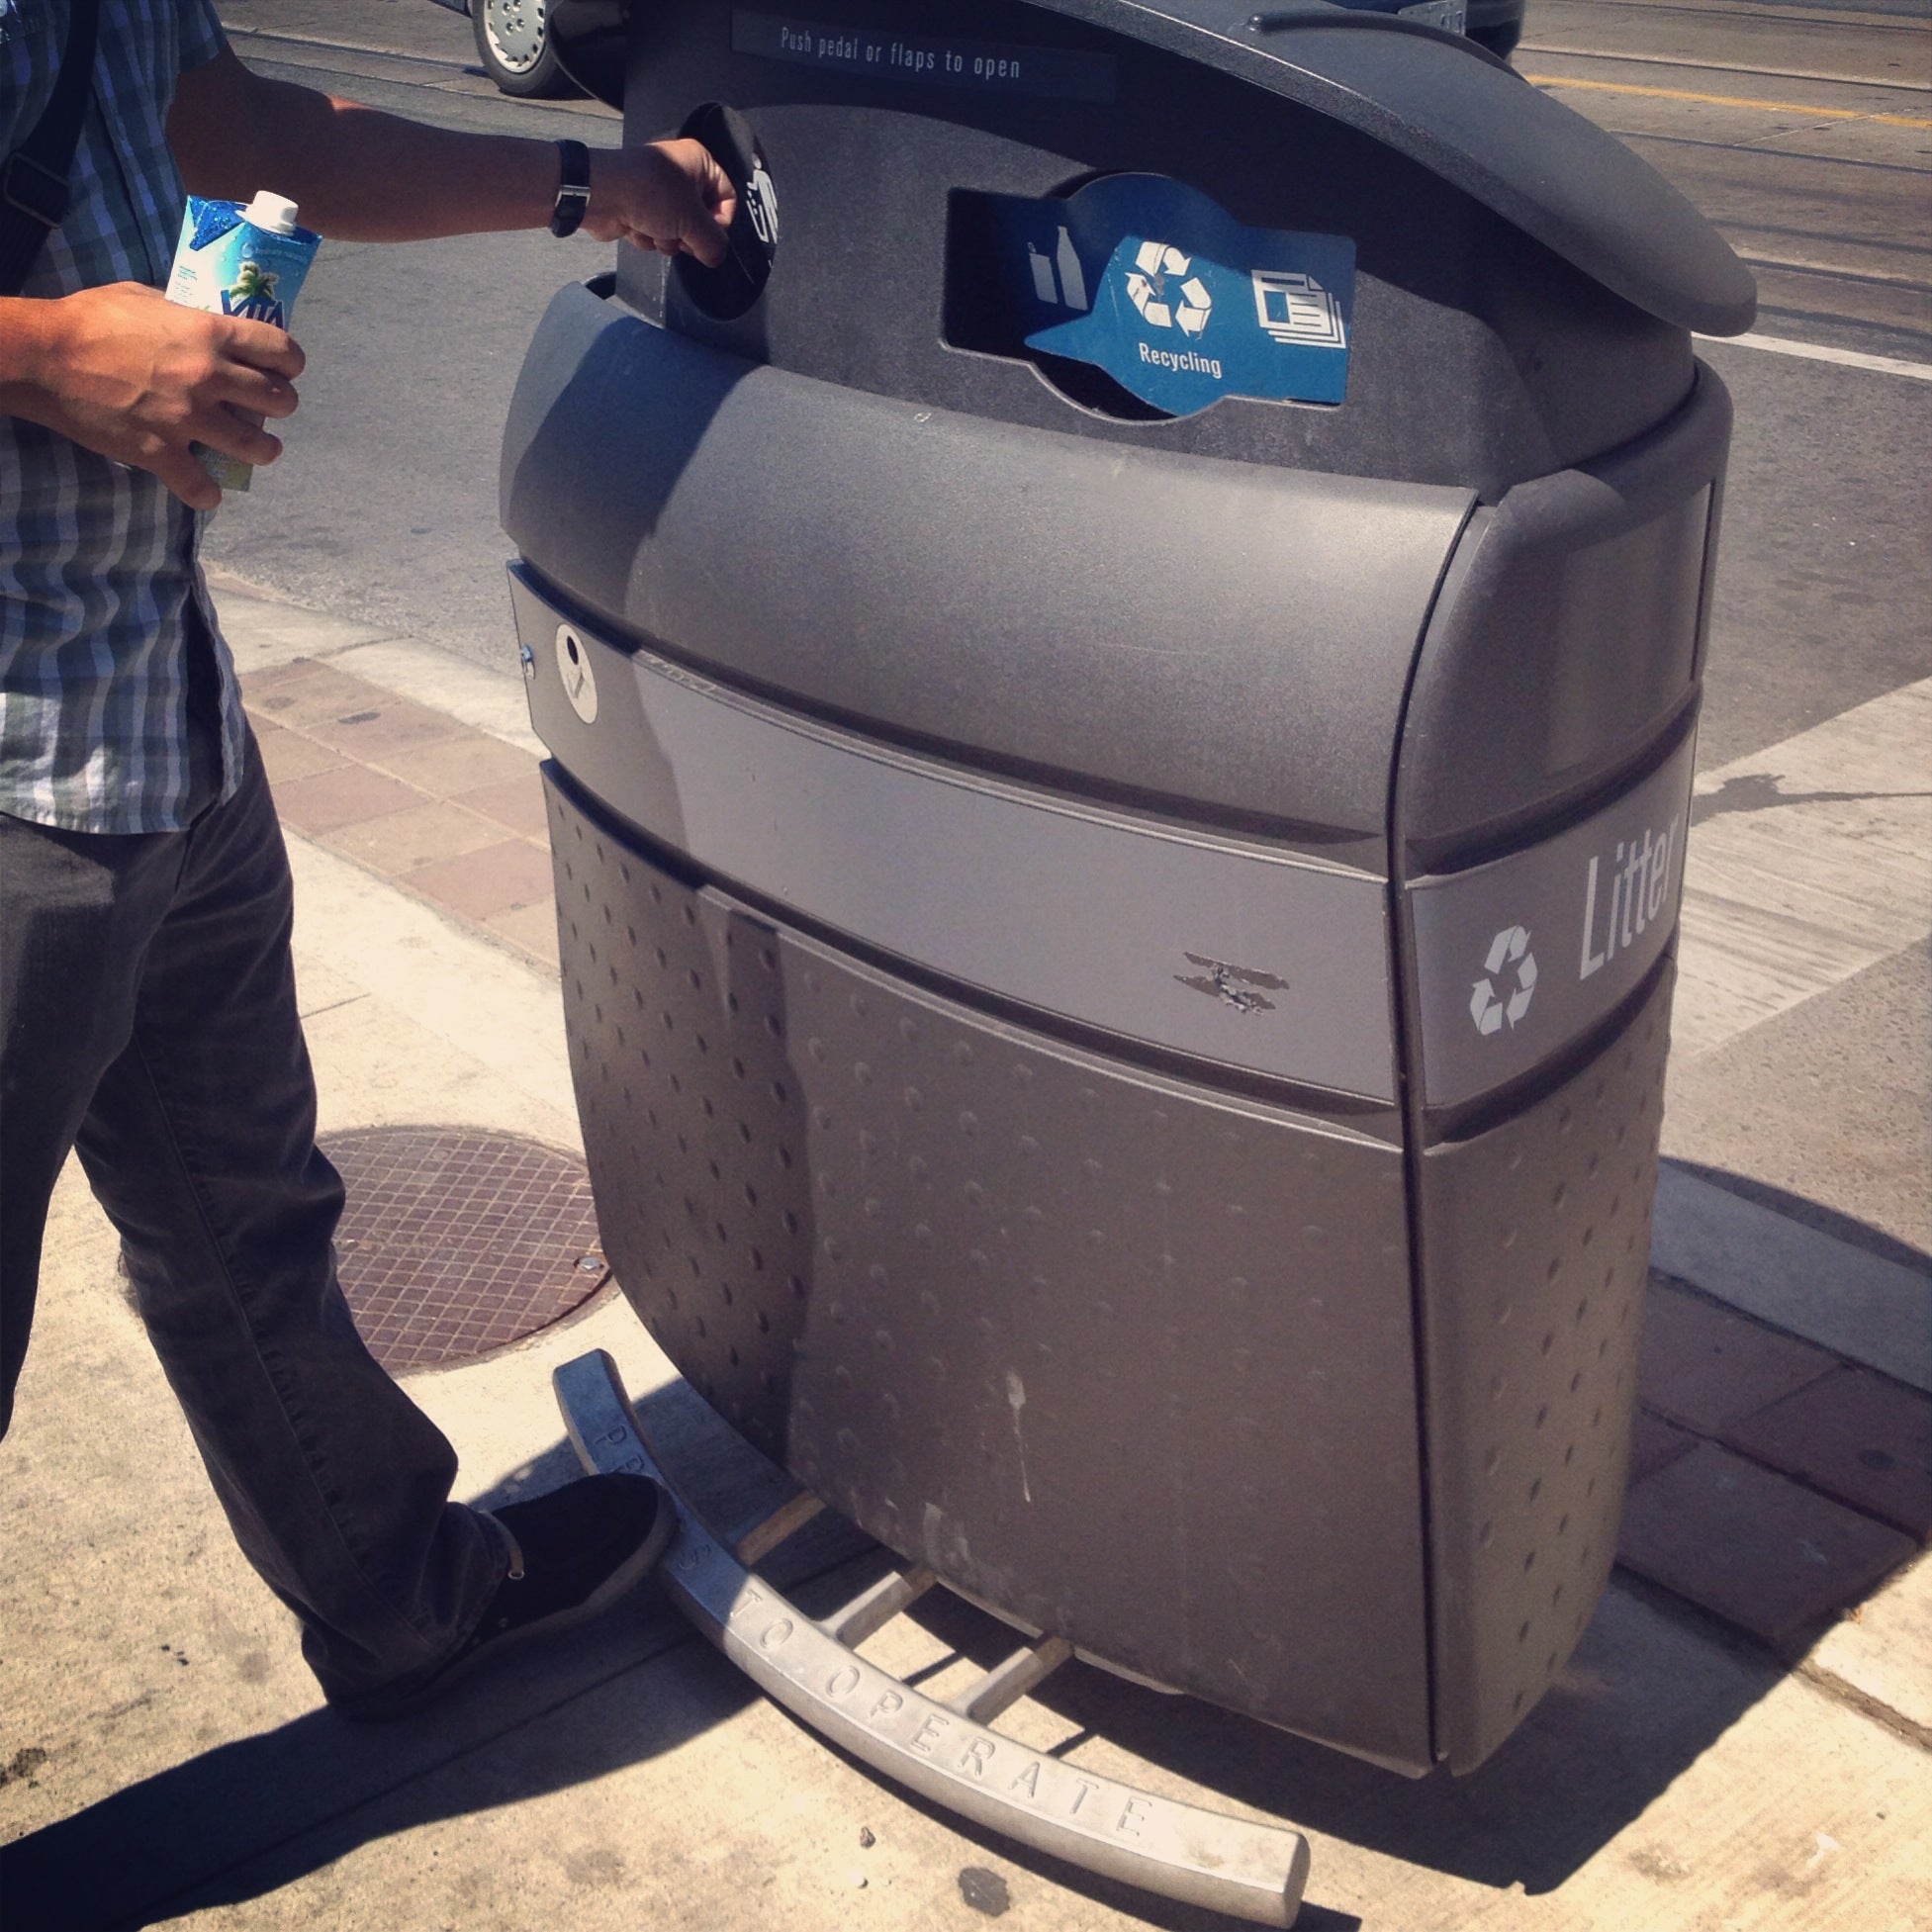 Pedal-powered bins line Toronto streets. 